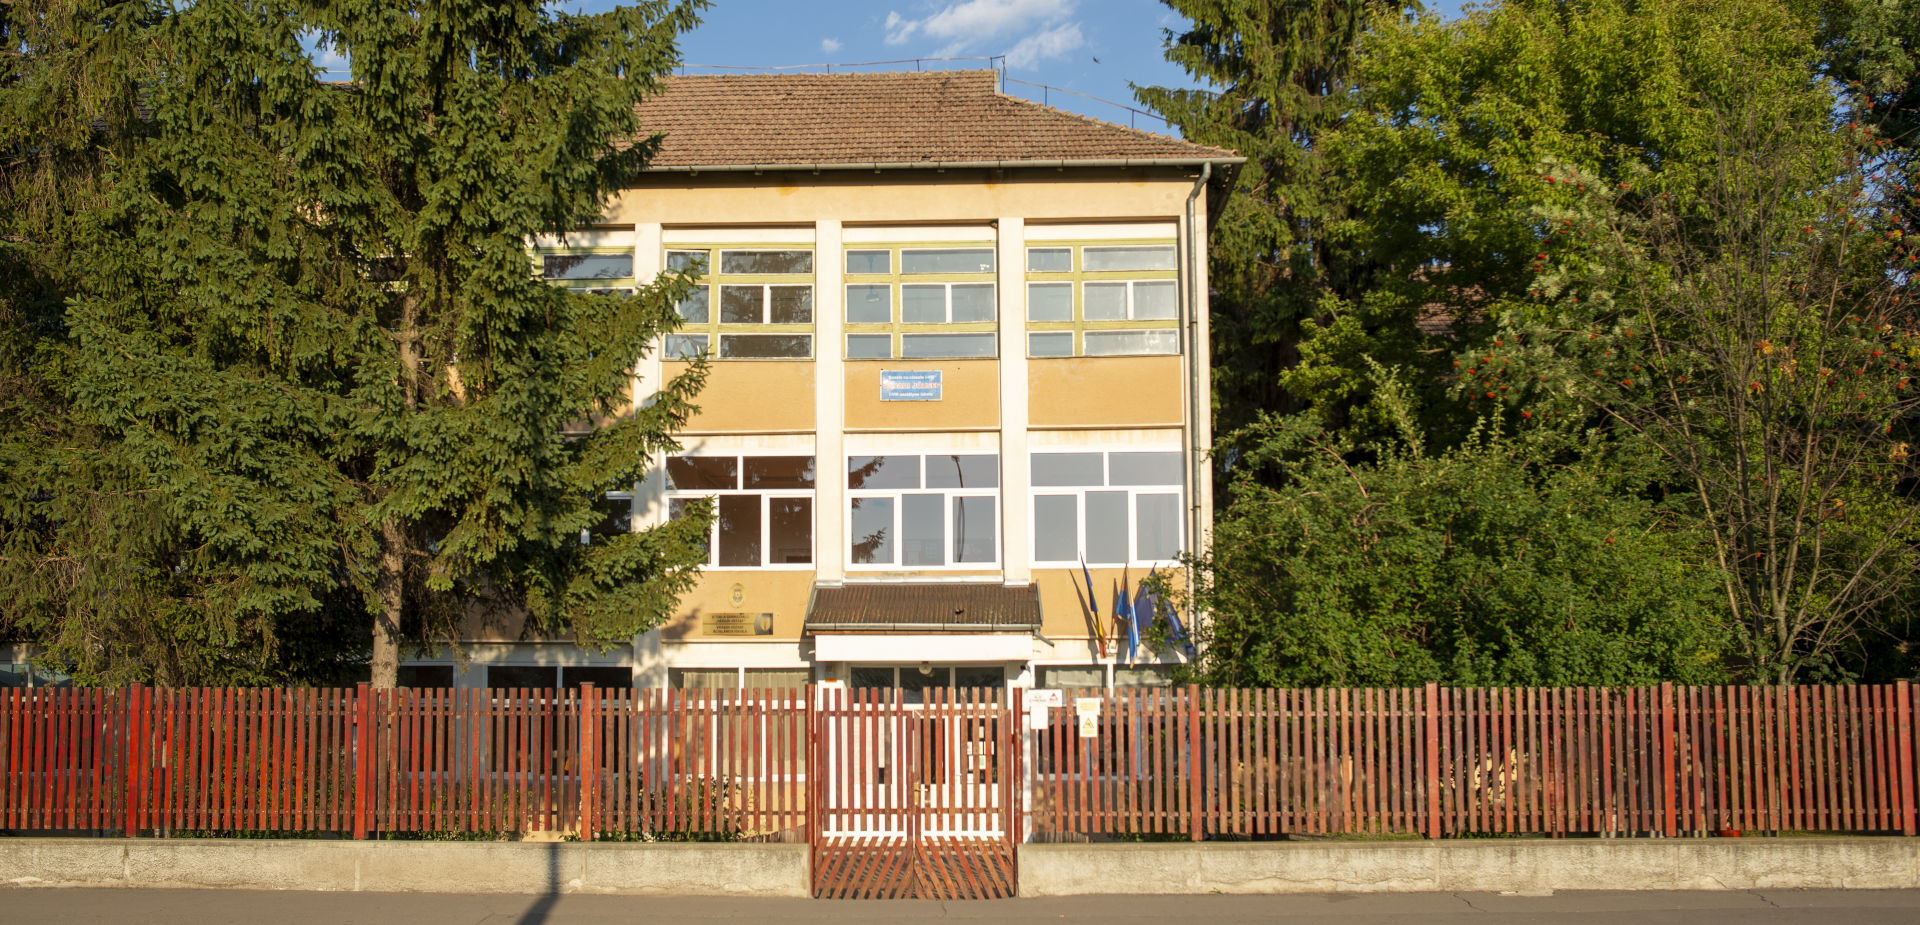 Școala Gimnazială Váradi József